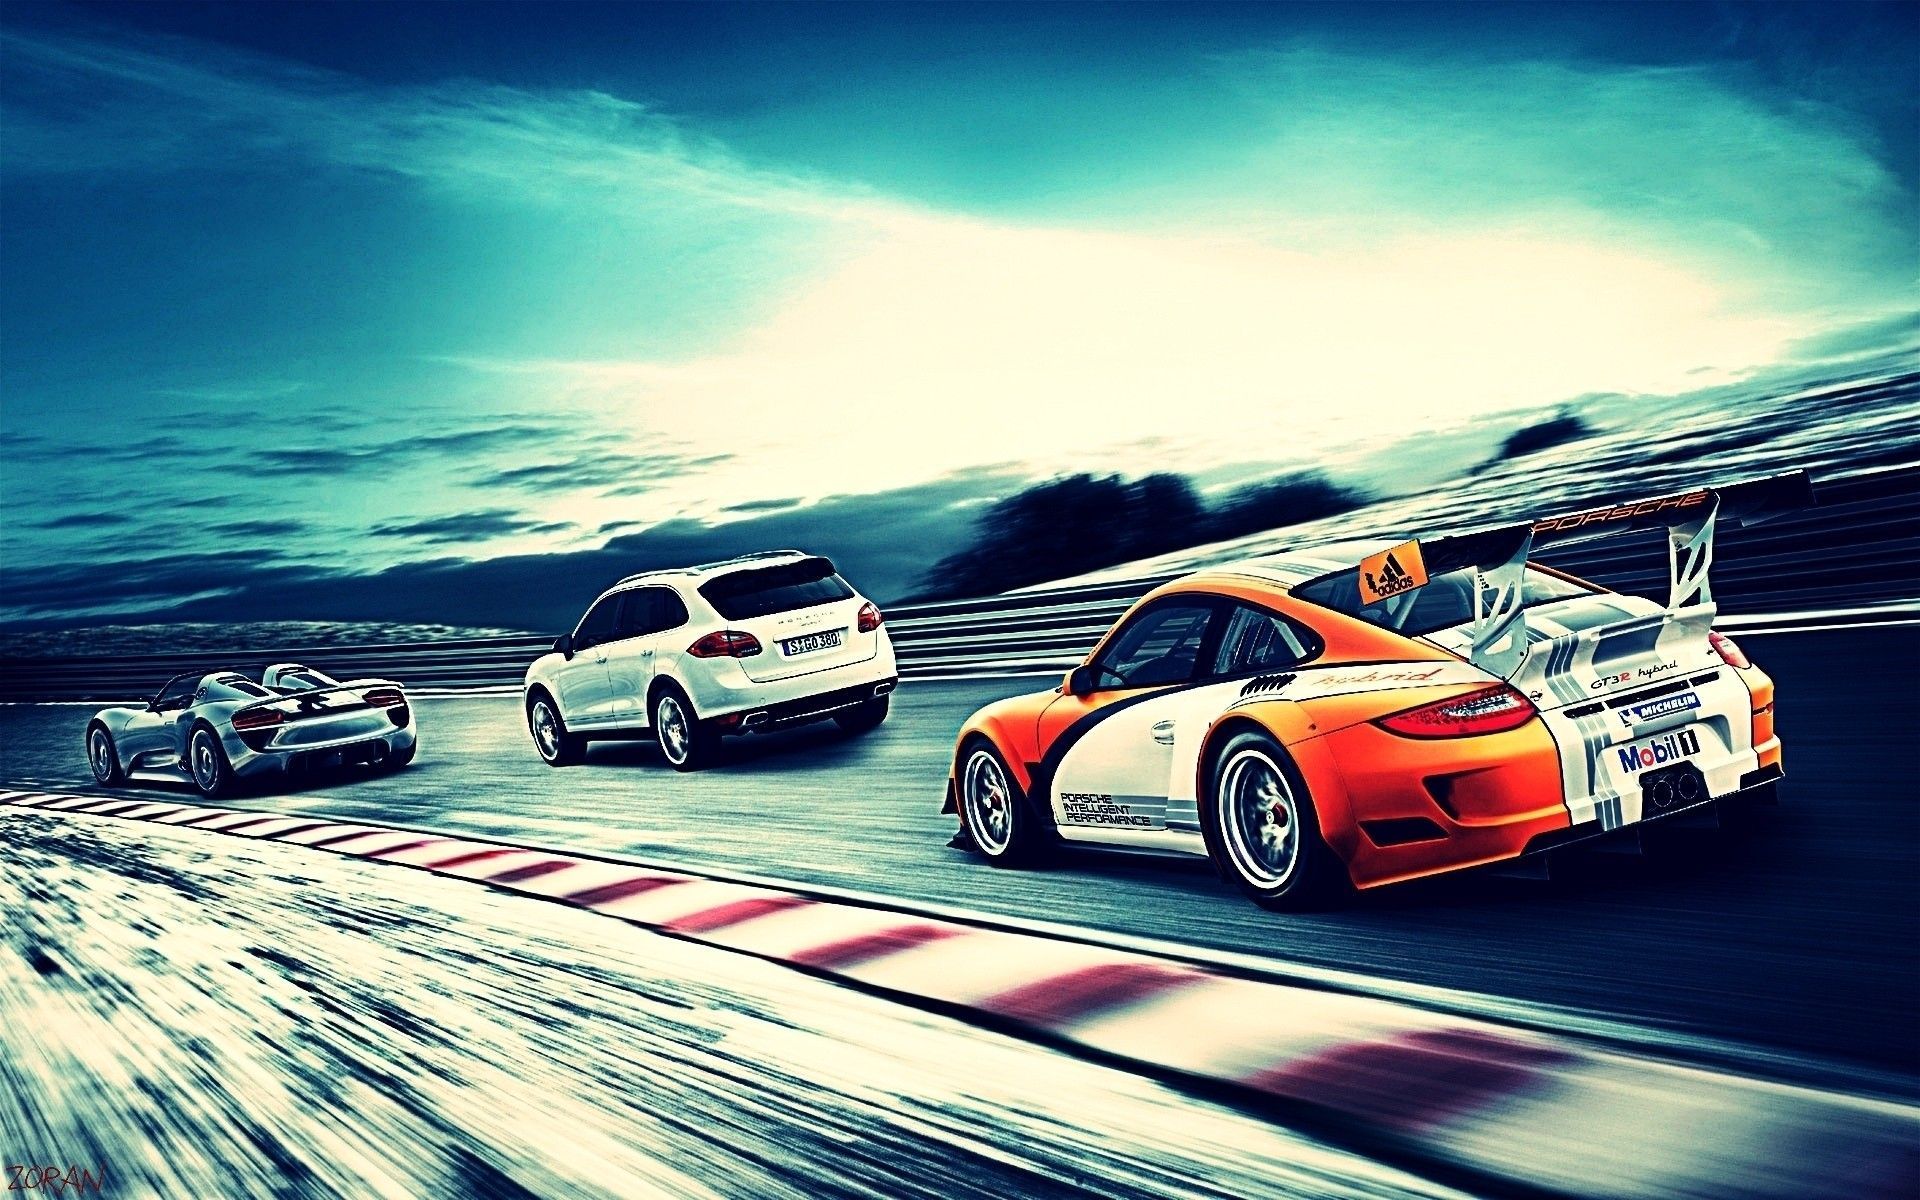 Porsche Sports Car Wallpaper Awesome Photos #ky0wb9o110 - Ehiyo.com